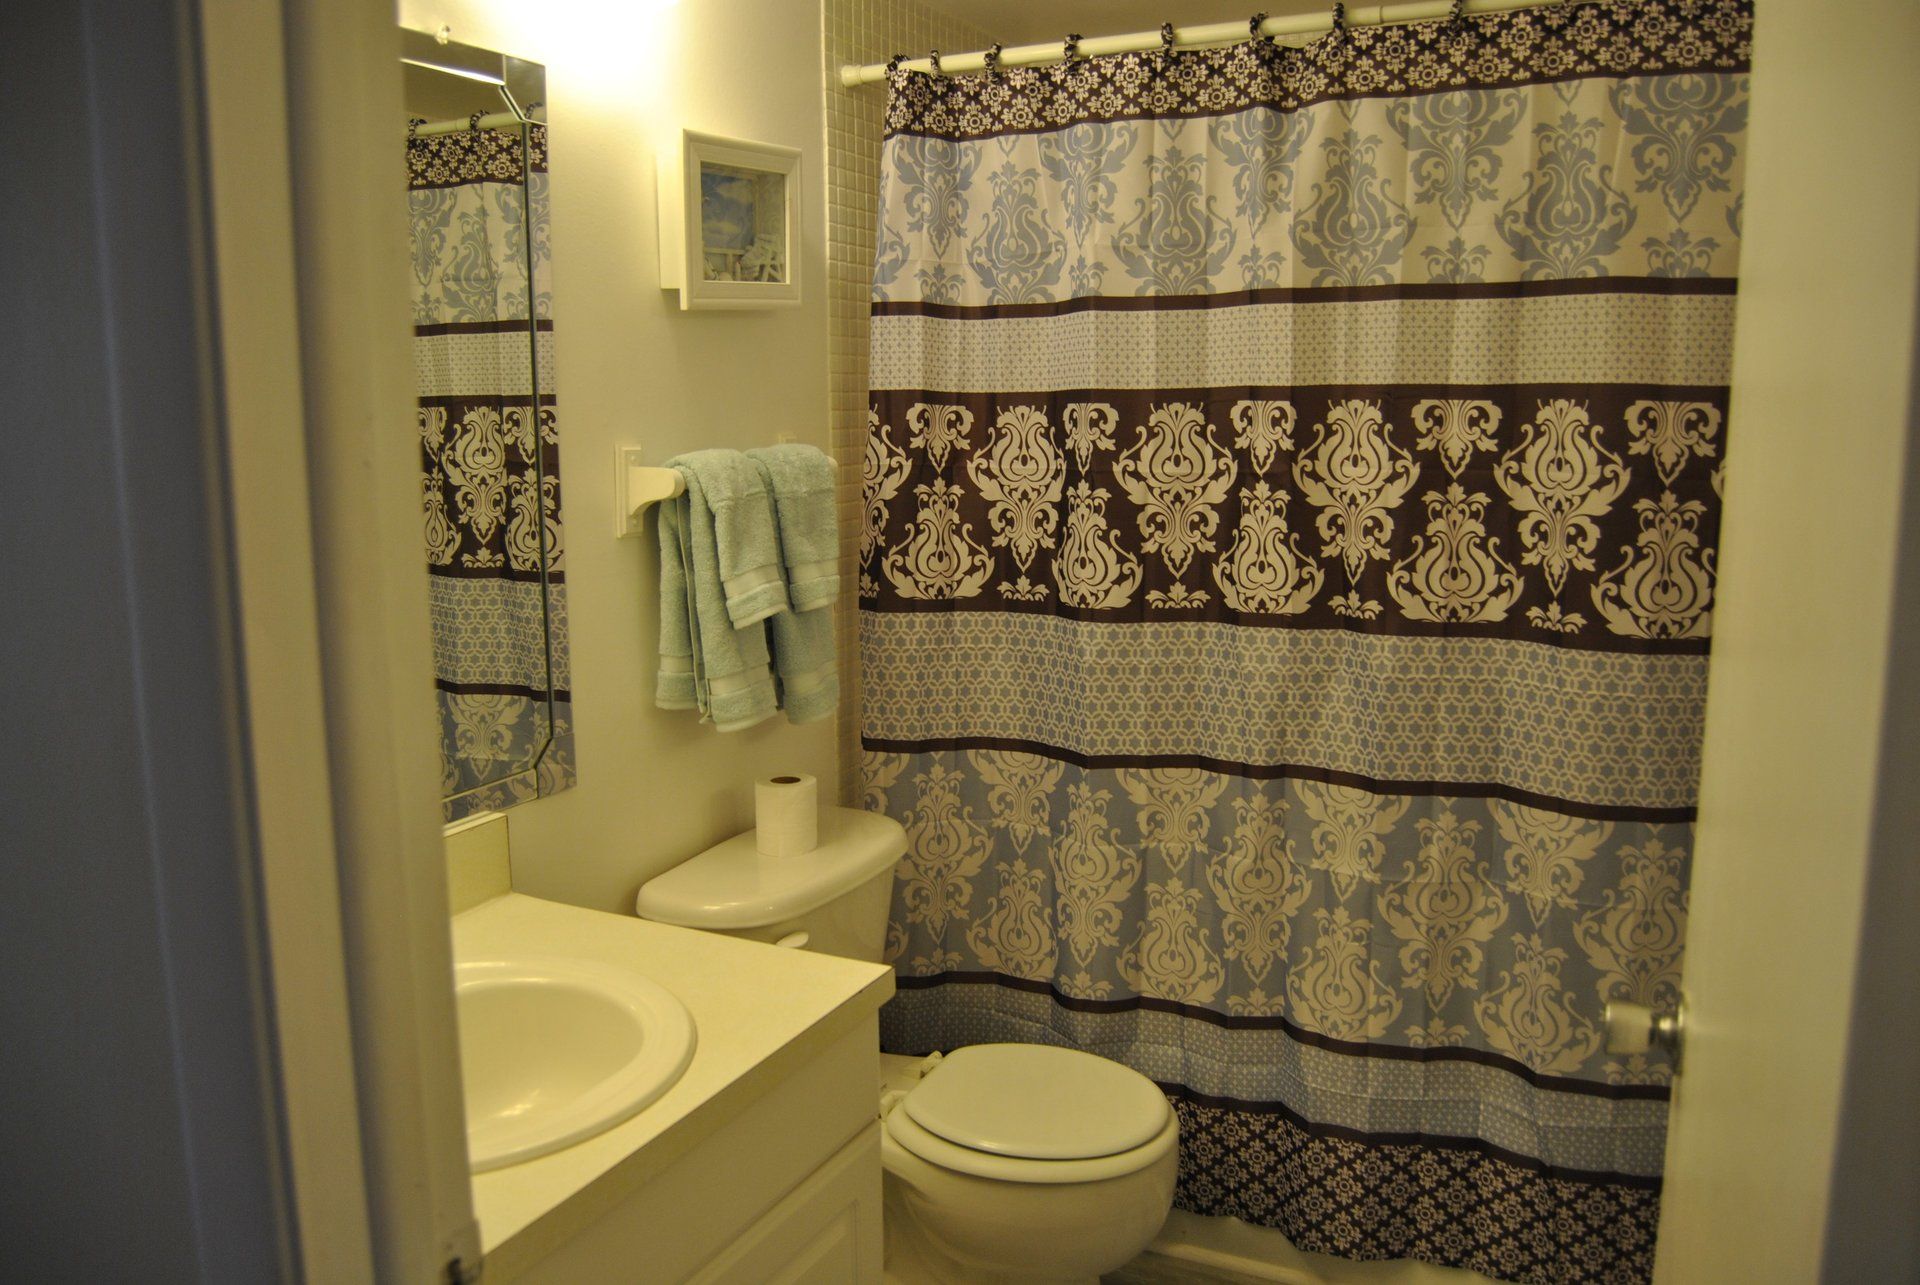 Bathroom sink, toilet, shower curtain